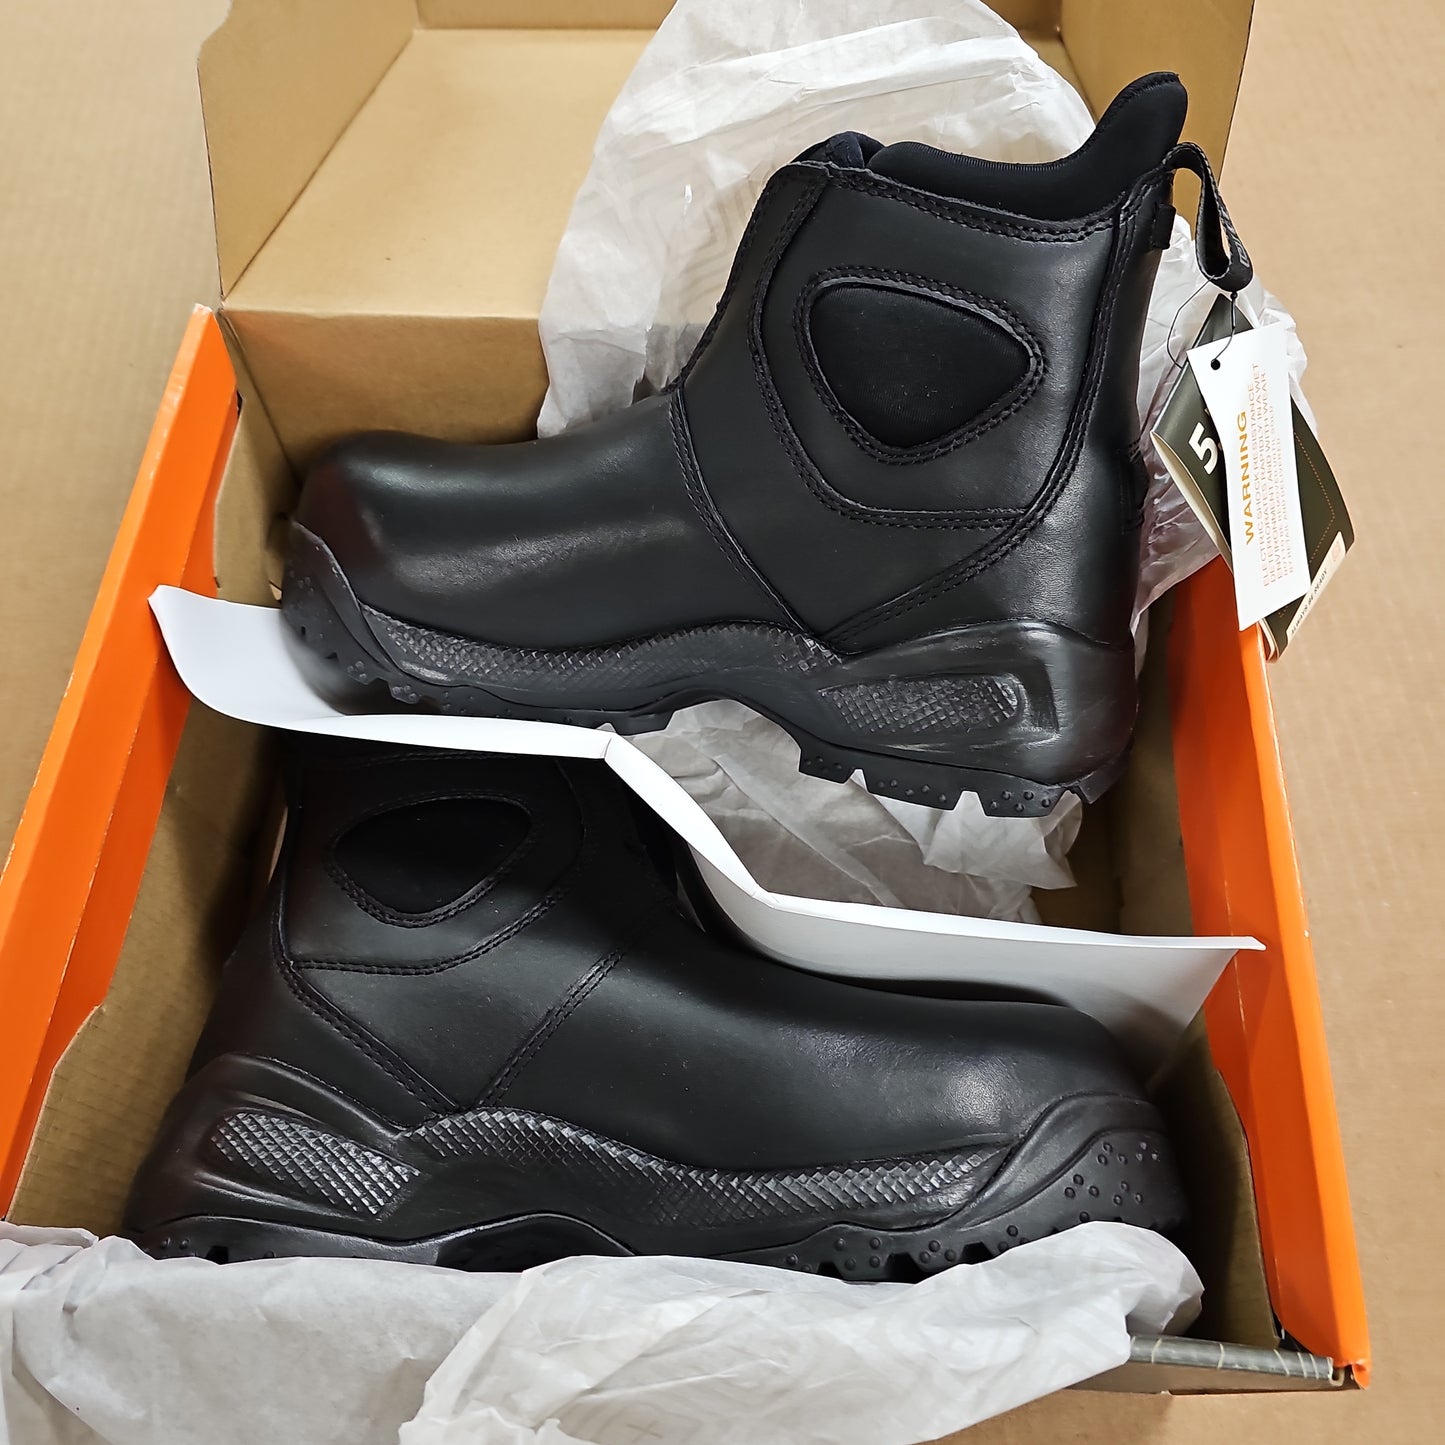 Boots: Company CST 2.0, Black, 7.5M 12033-019-7.5R